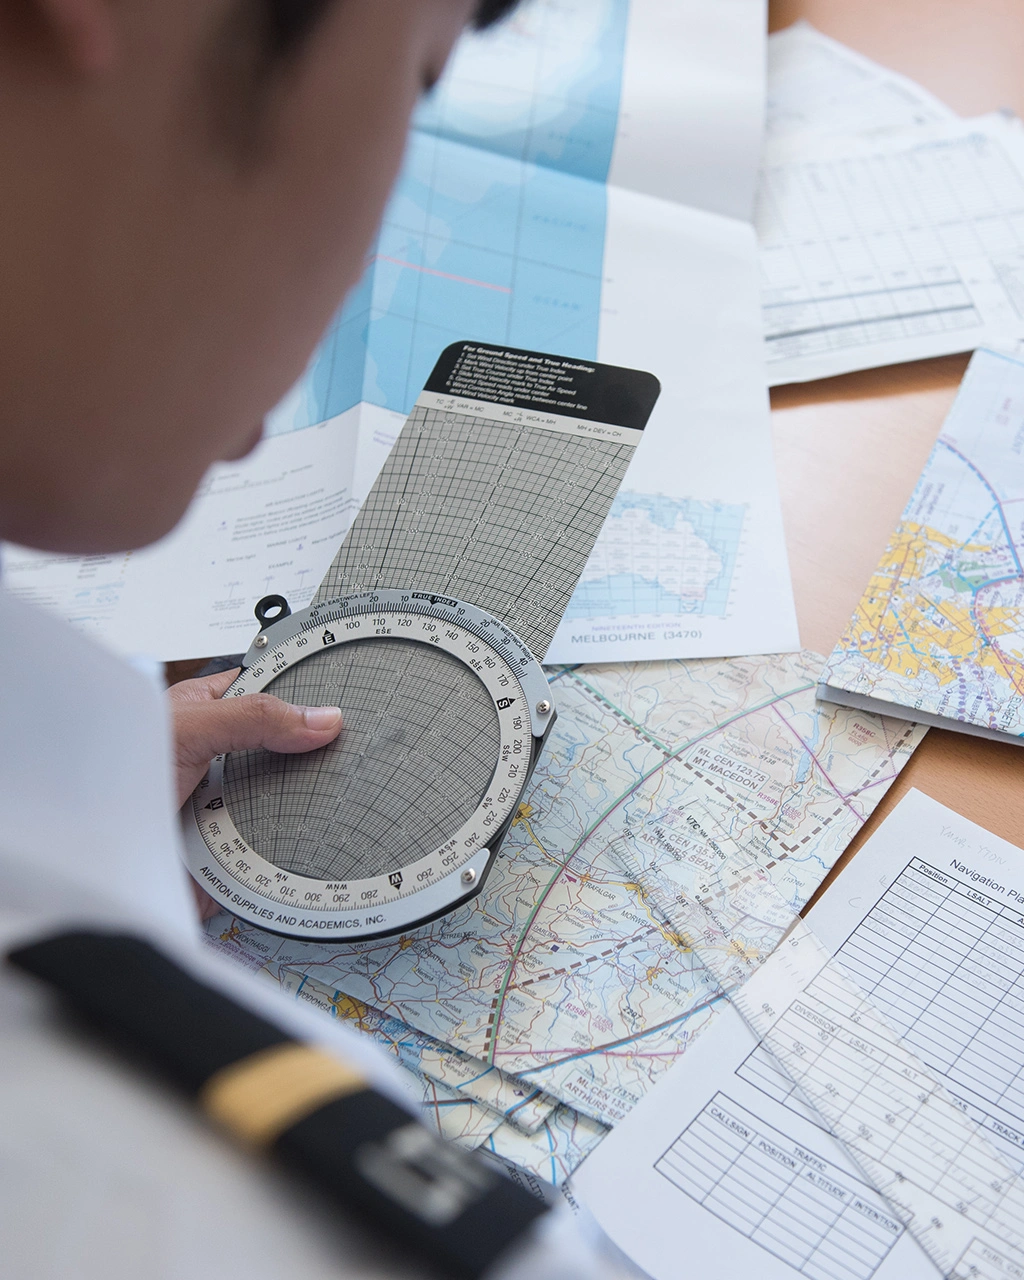 Basic Pilot Navigation Skills – PPL Training